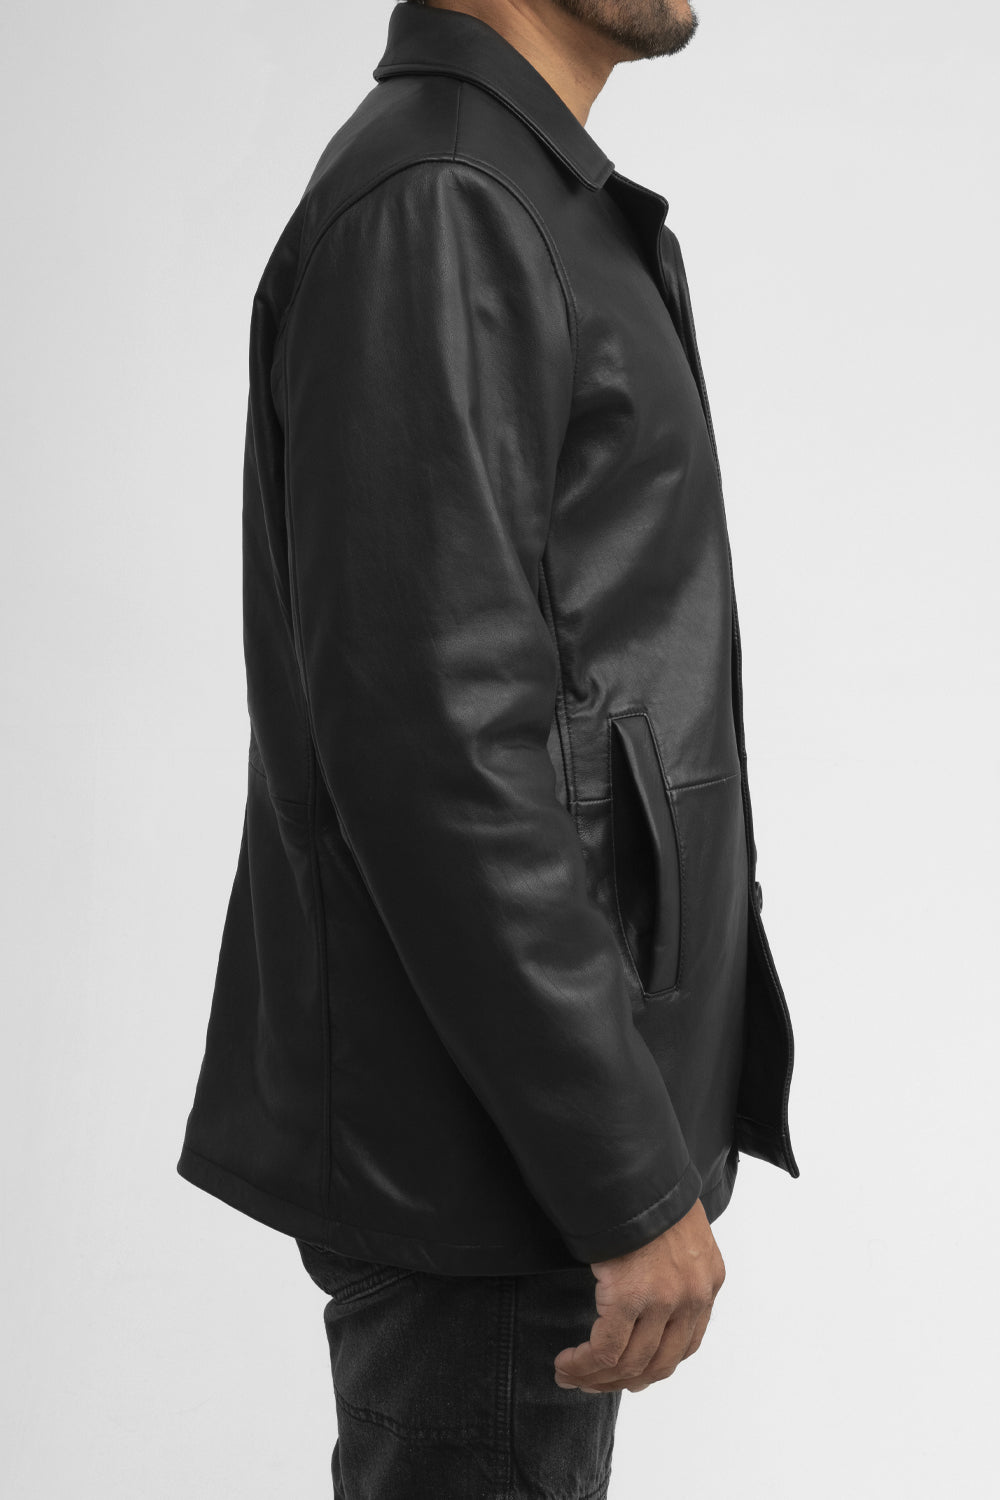 Strata Mens Fashion Leather Jacket